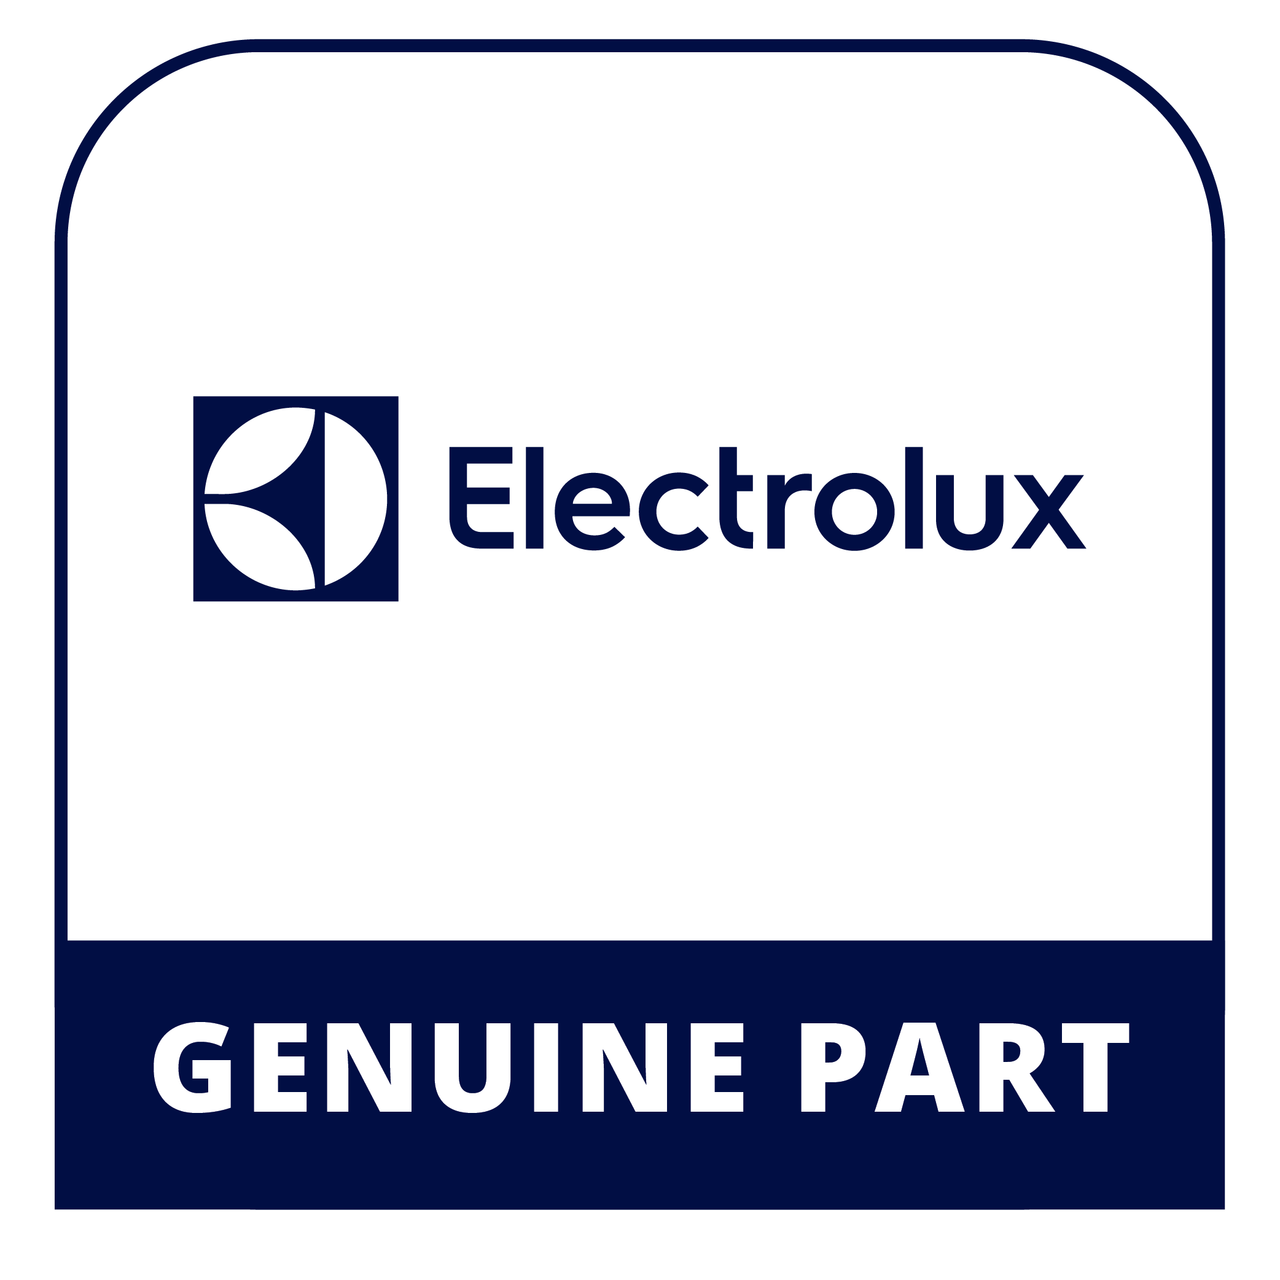 Frigidaire - Electrolux 316442061 - Board - Genuine Electrolux Part